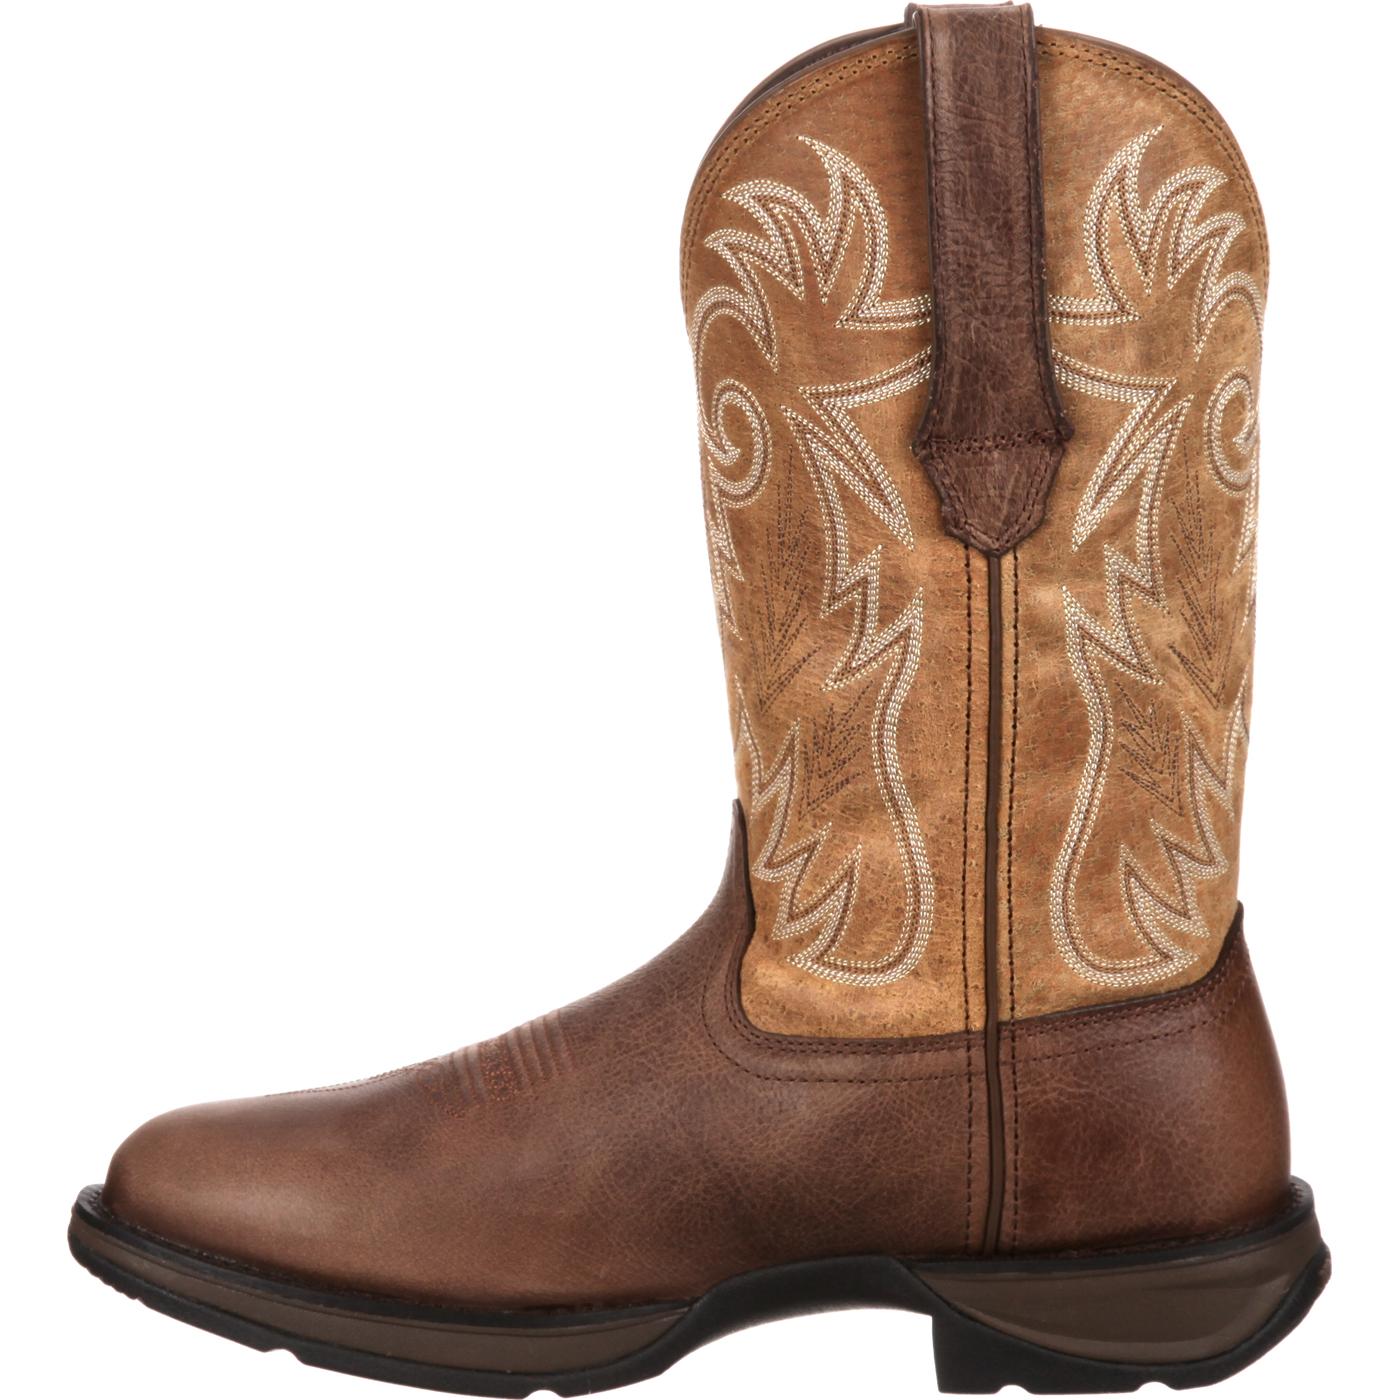 Rebel by Durango Steel Toe Western Boot, #DWDB018